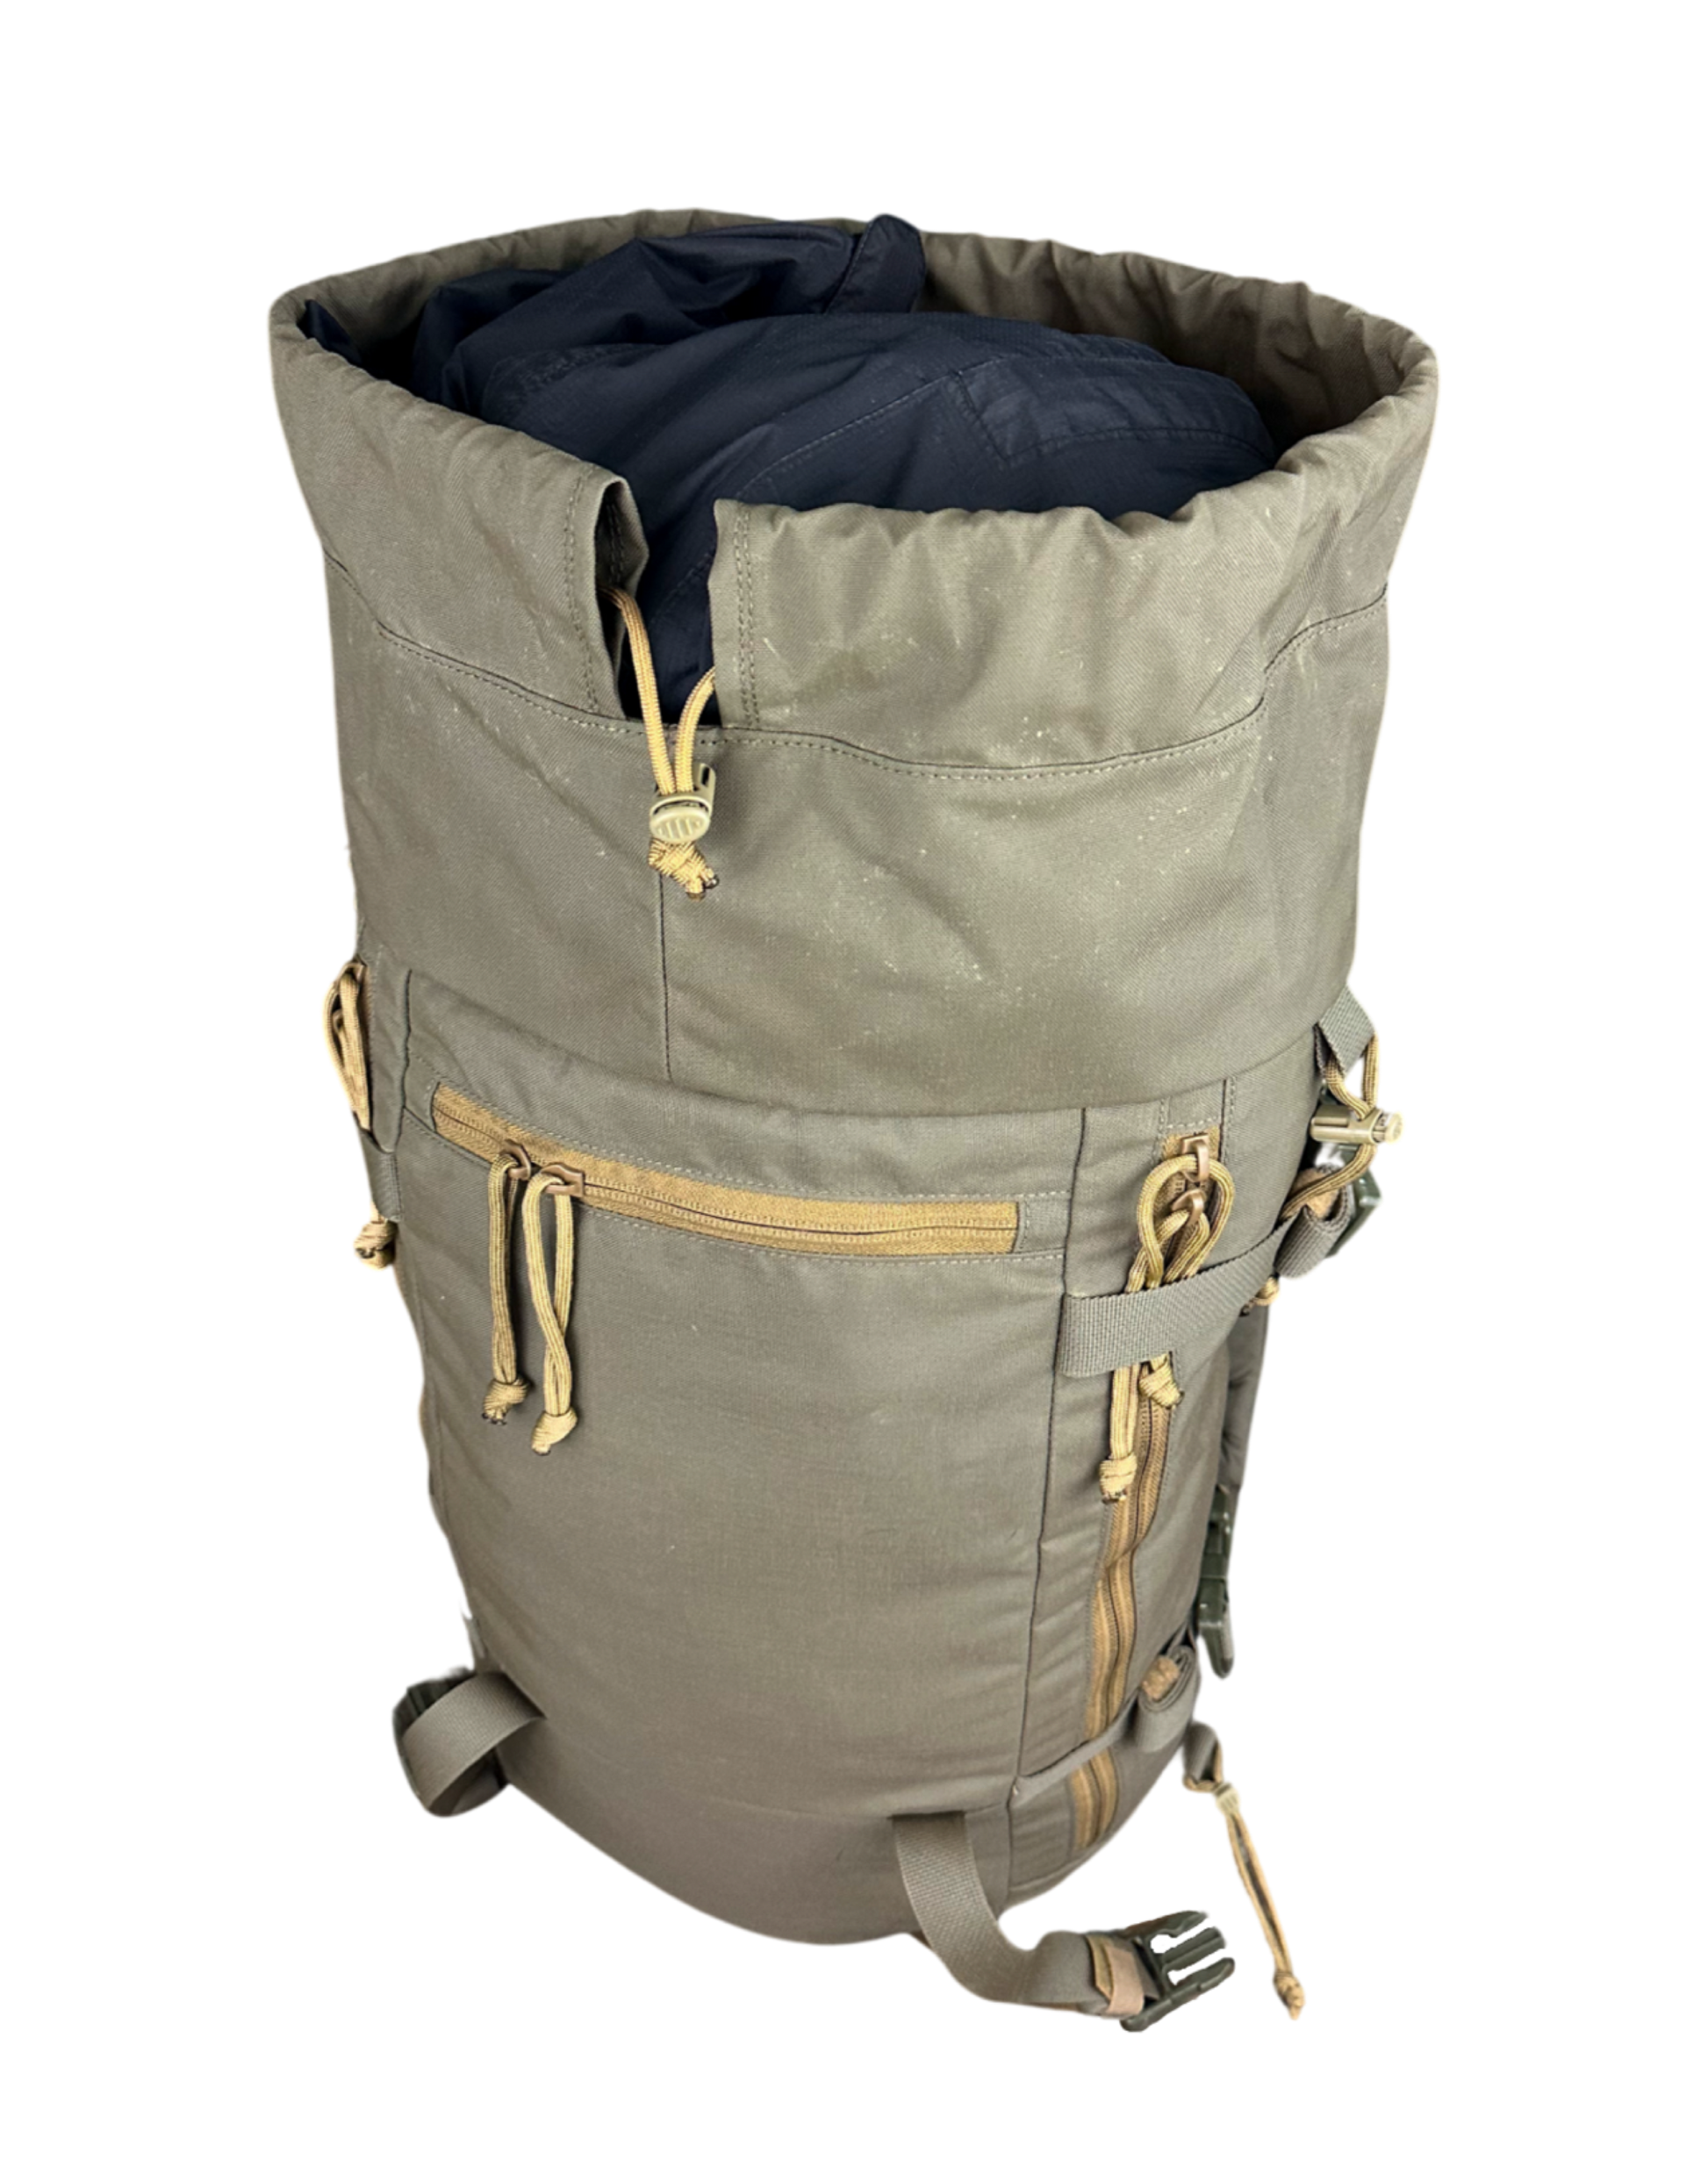 Ruckmule gunner mountain hiking hunting scouting backpack ranger green top opening front zipper pocket 